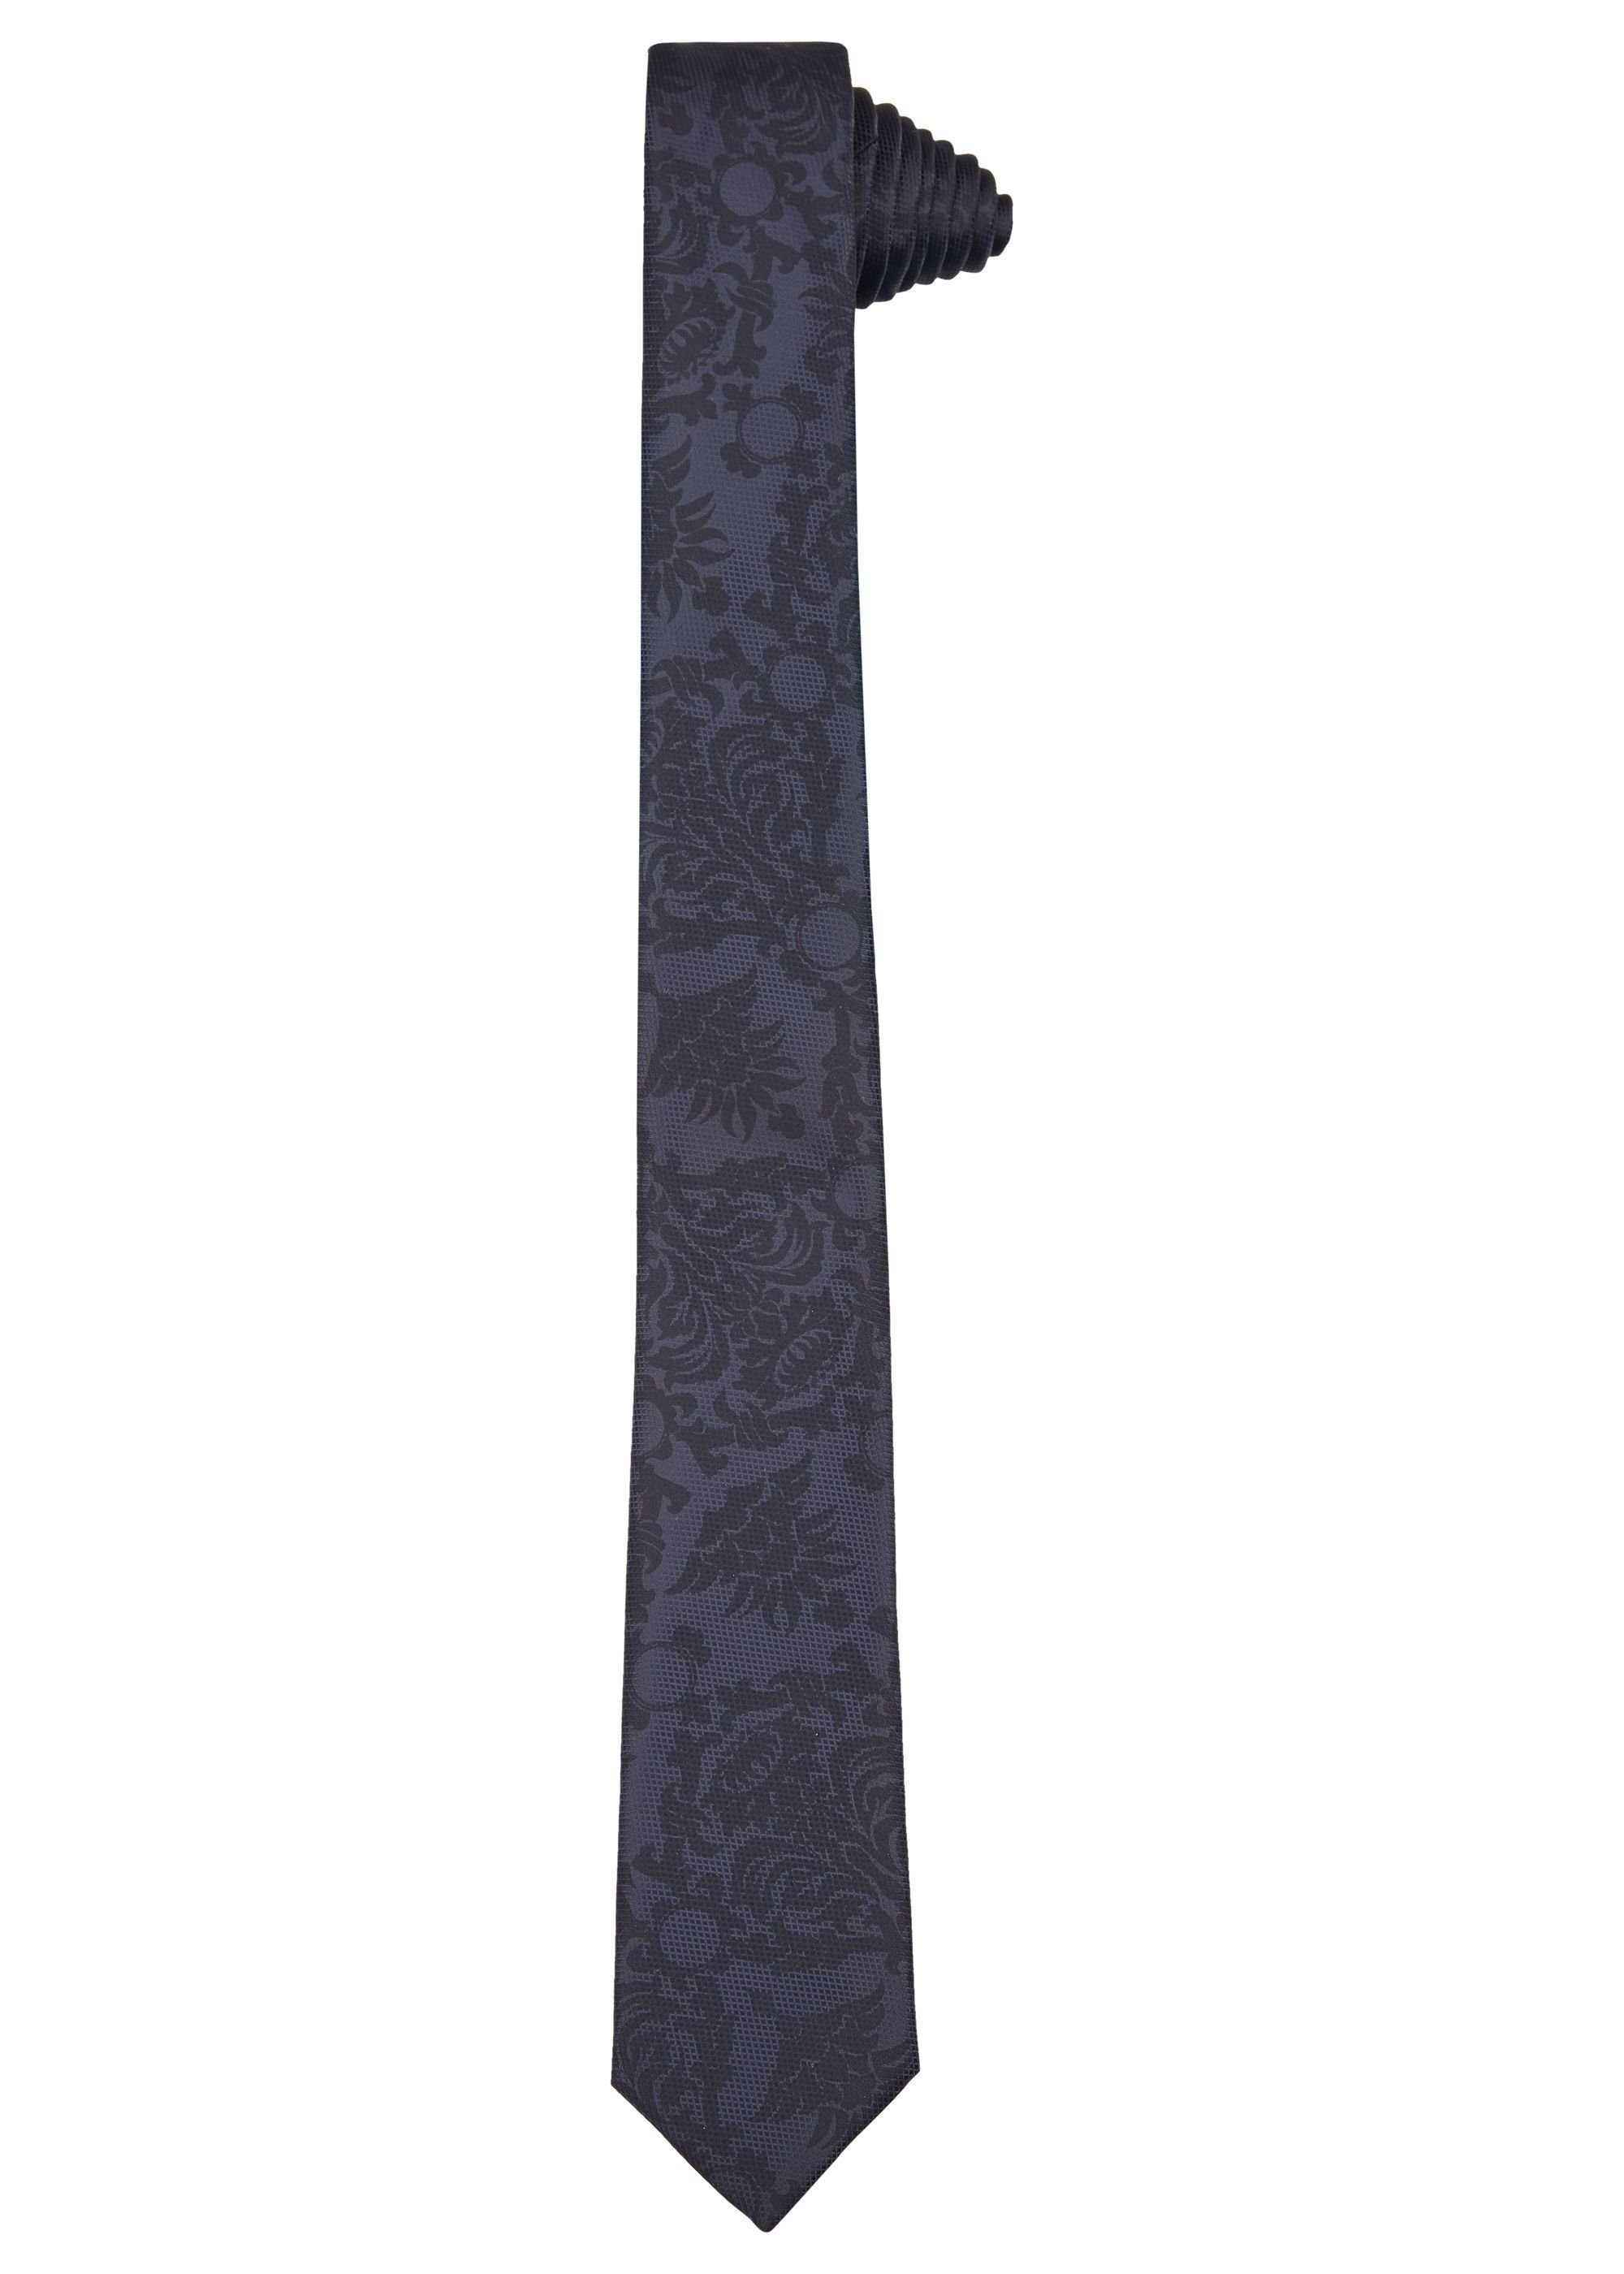 PARIS HECHTER Kunstfaser Krawatte aus hochwertiger